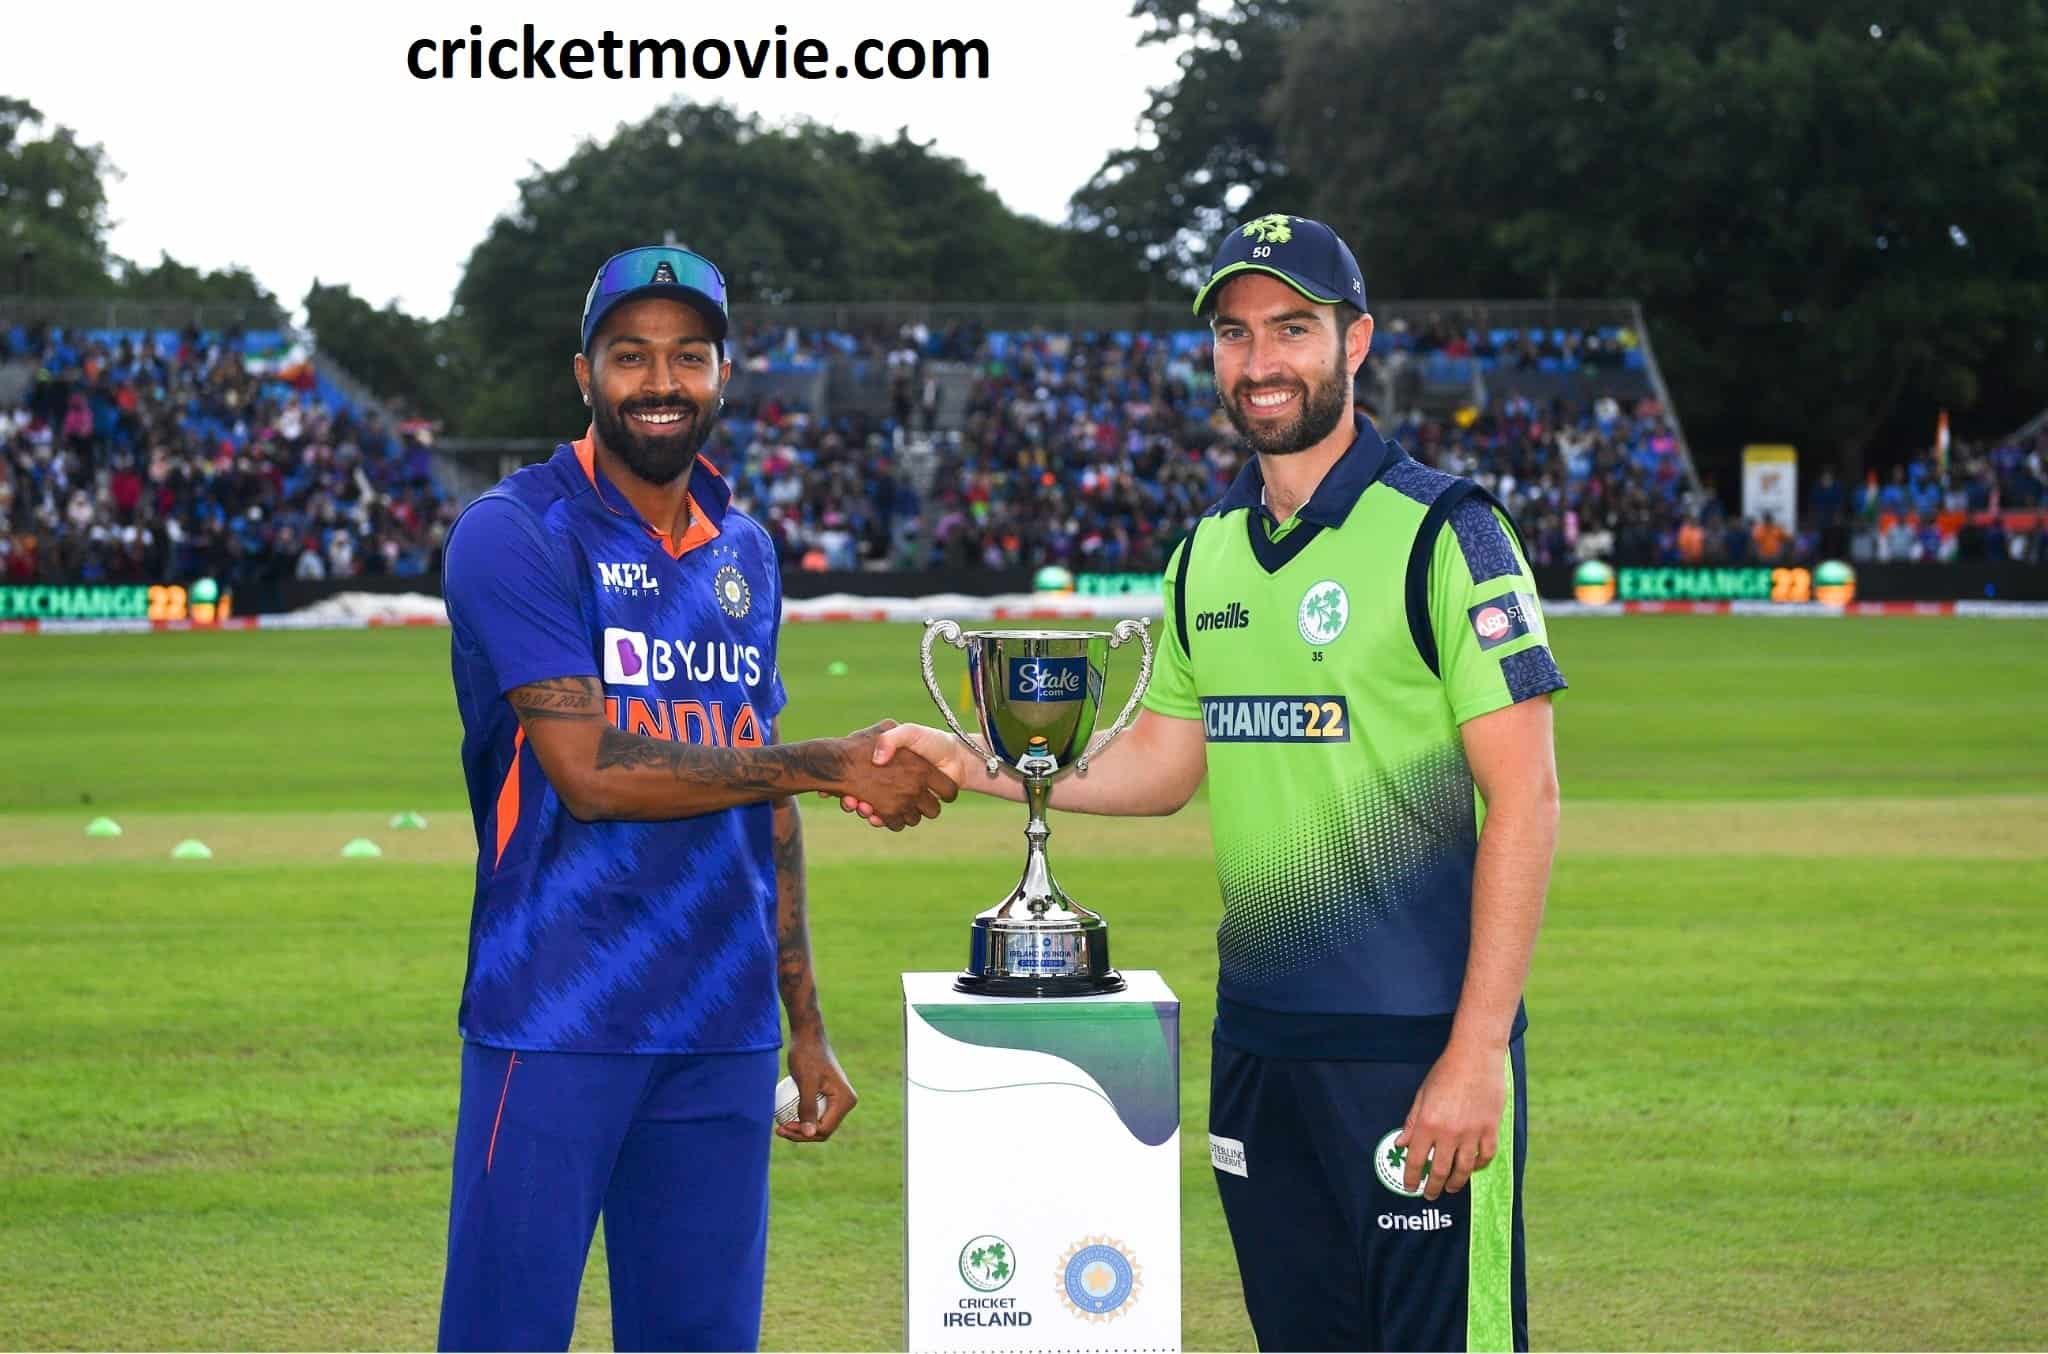 India won 1st T20 by 7 wickets against Ireland-cricketmovie.com